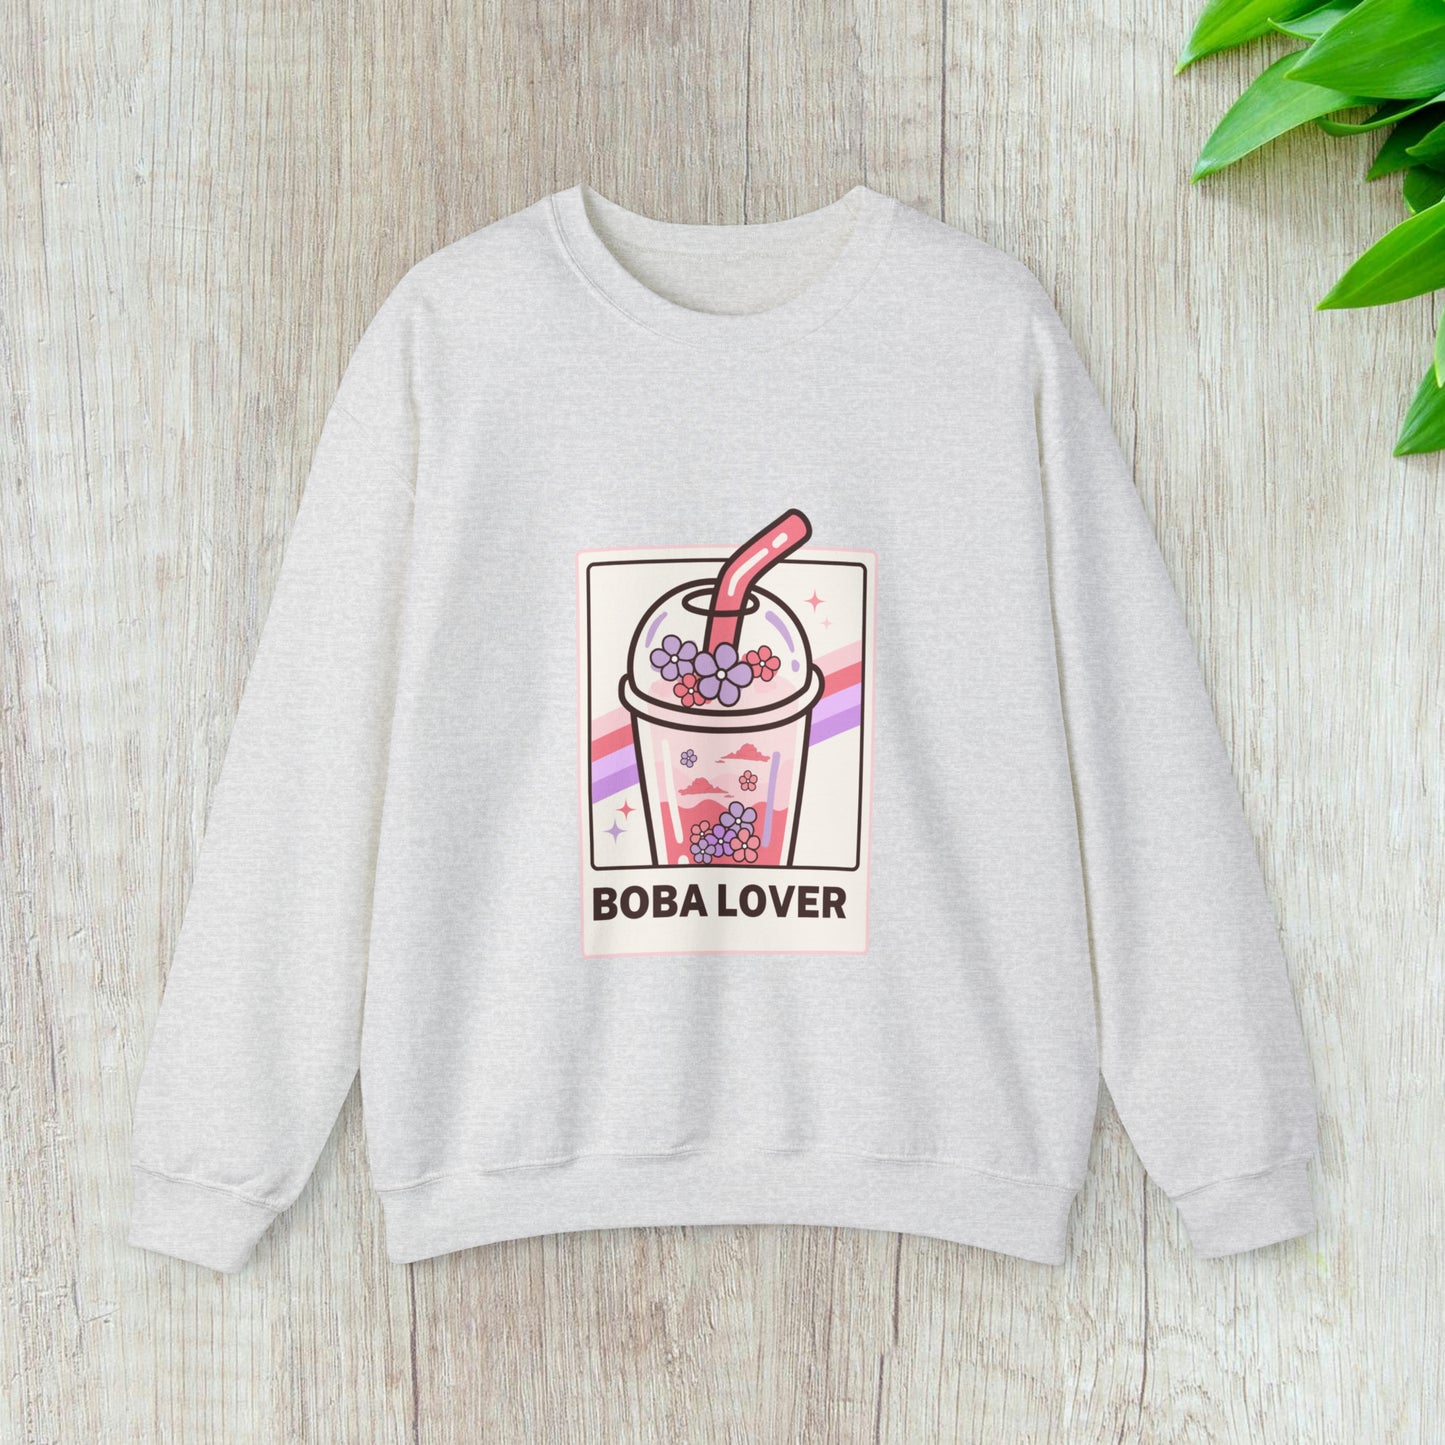 BOBA LOVER - Unisex Crewneck Sweatshirt